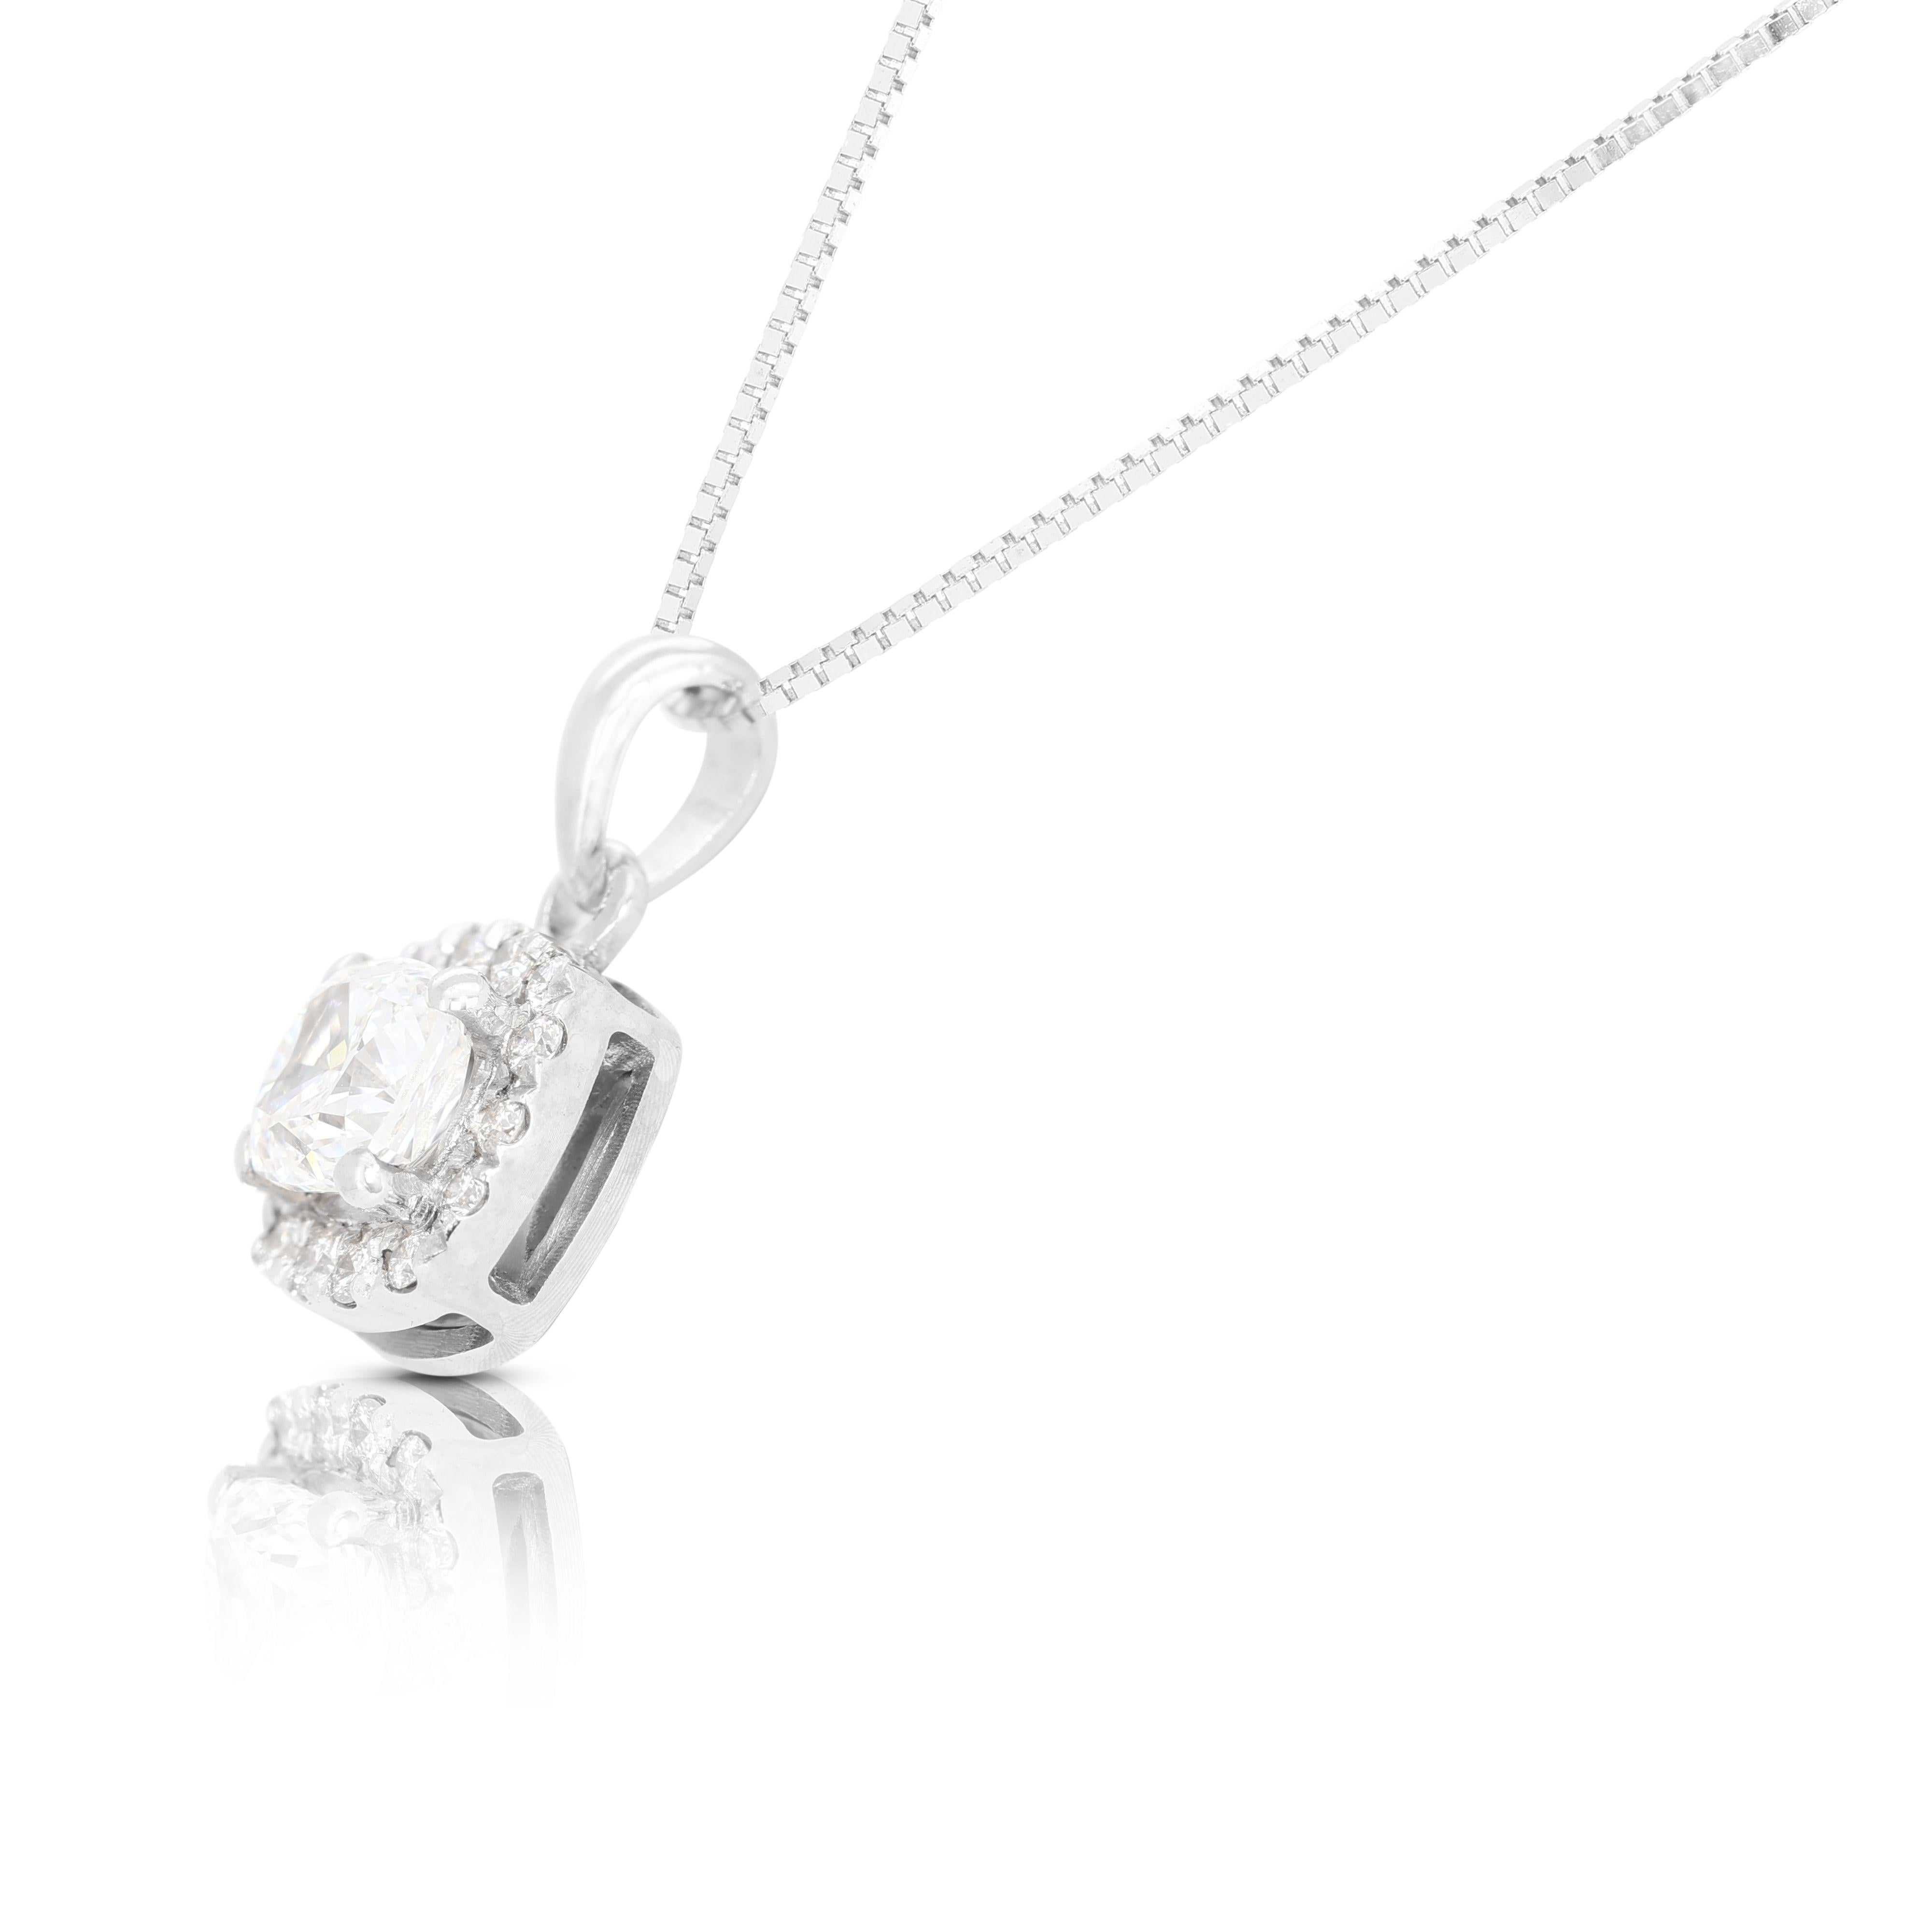 Women's Elegant 18k White Gold Halo Pendant w/ 0.65ct Diamonds - Chain not included For Sale